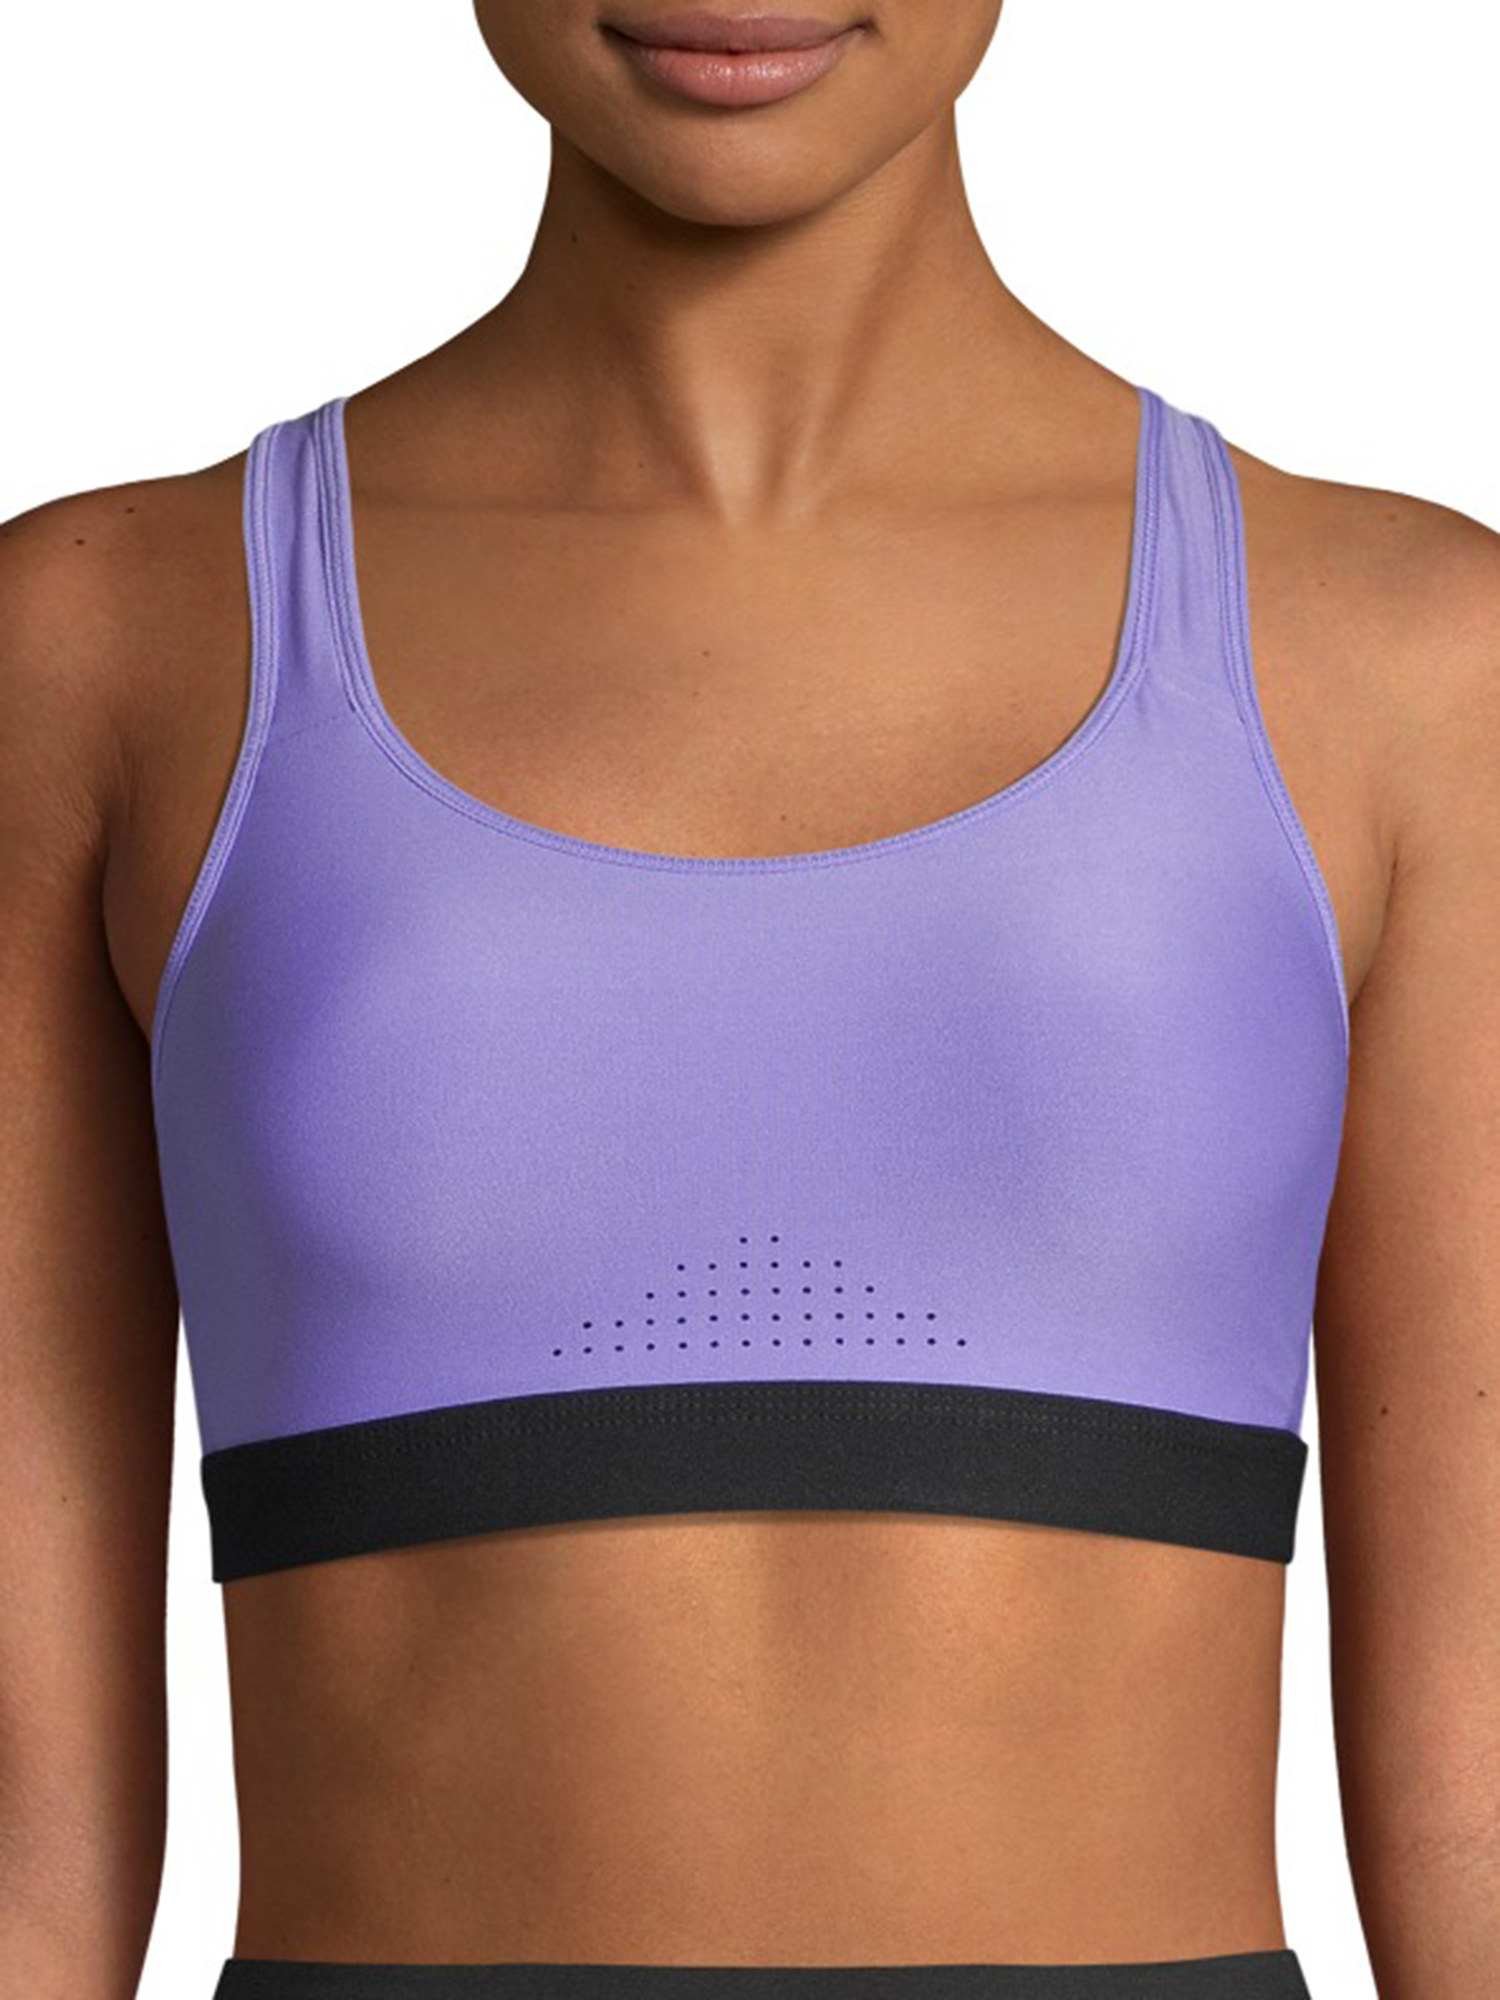 The purple sports bra